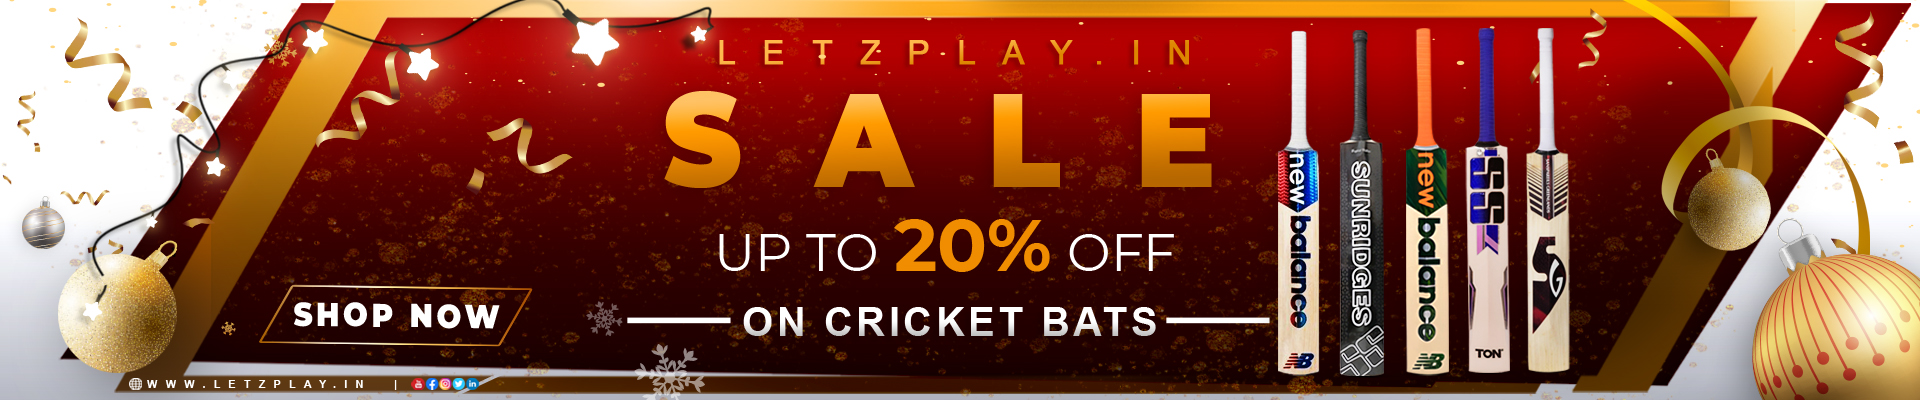 Best Sports shopping platform buy now SS, SG, New Balance Cricket Bat online.